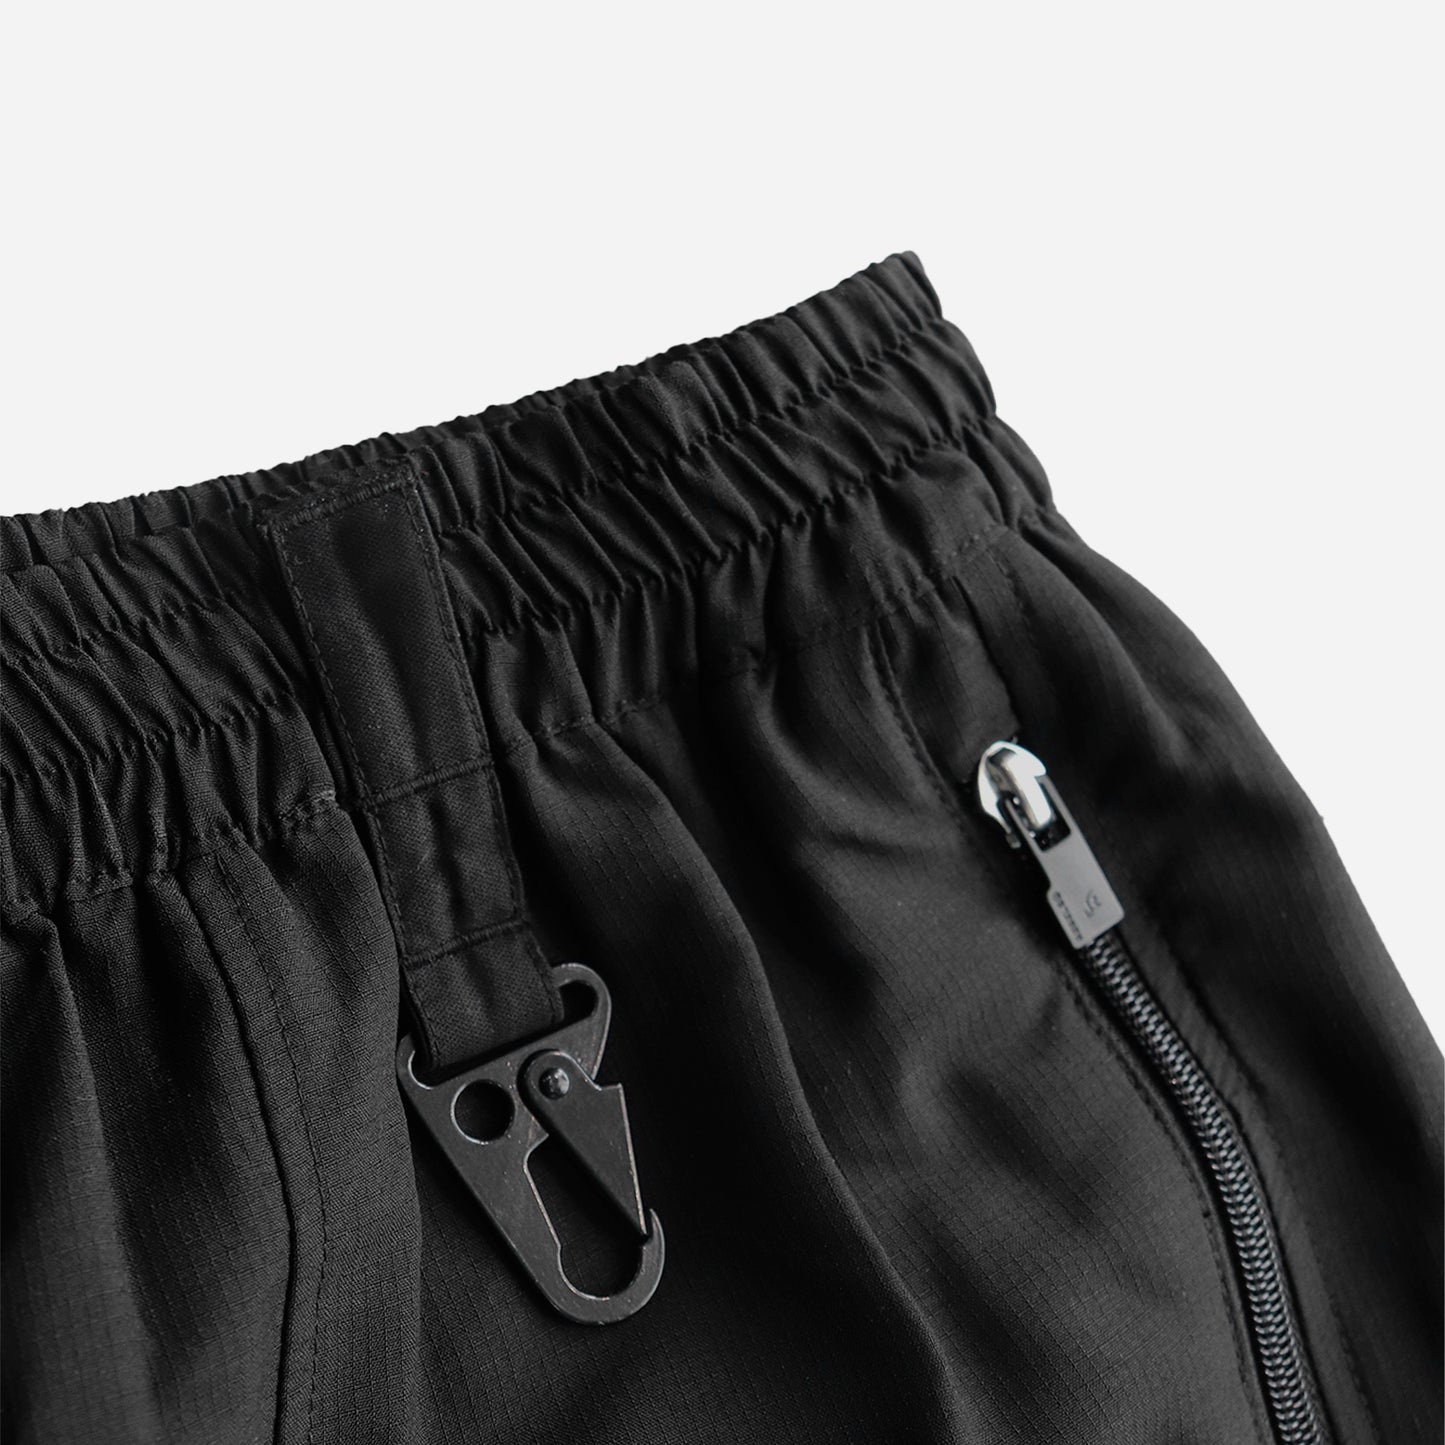 R zipper shorts-black